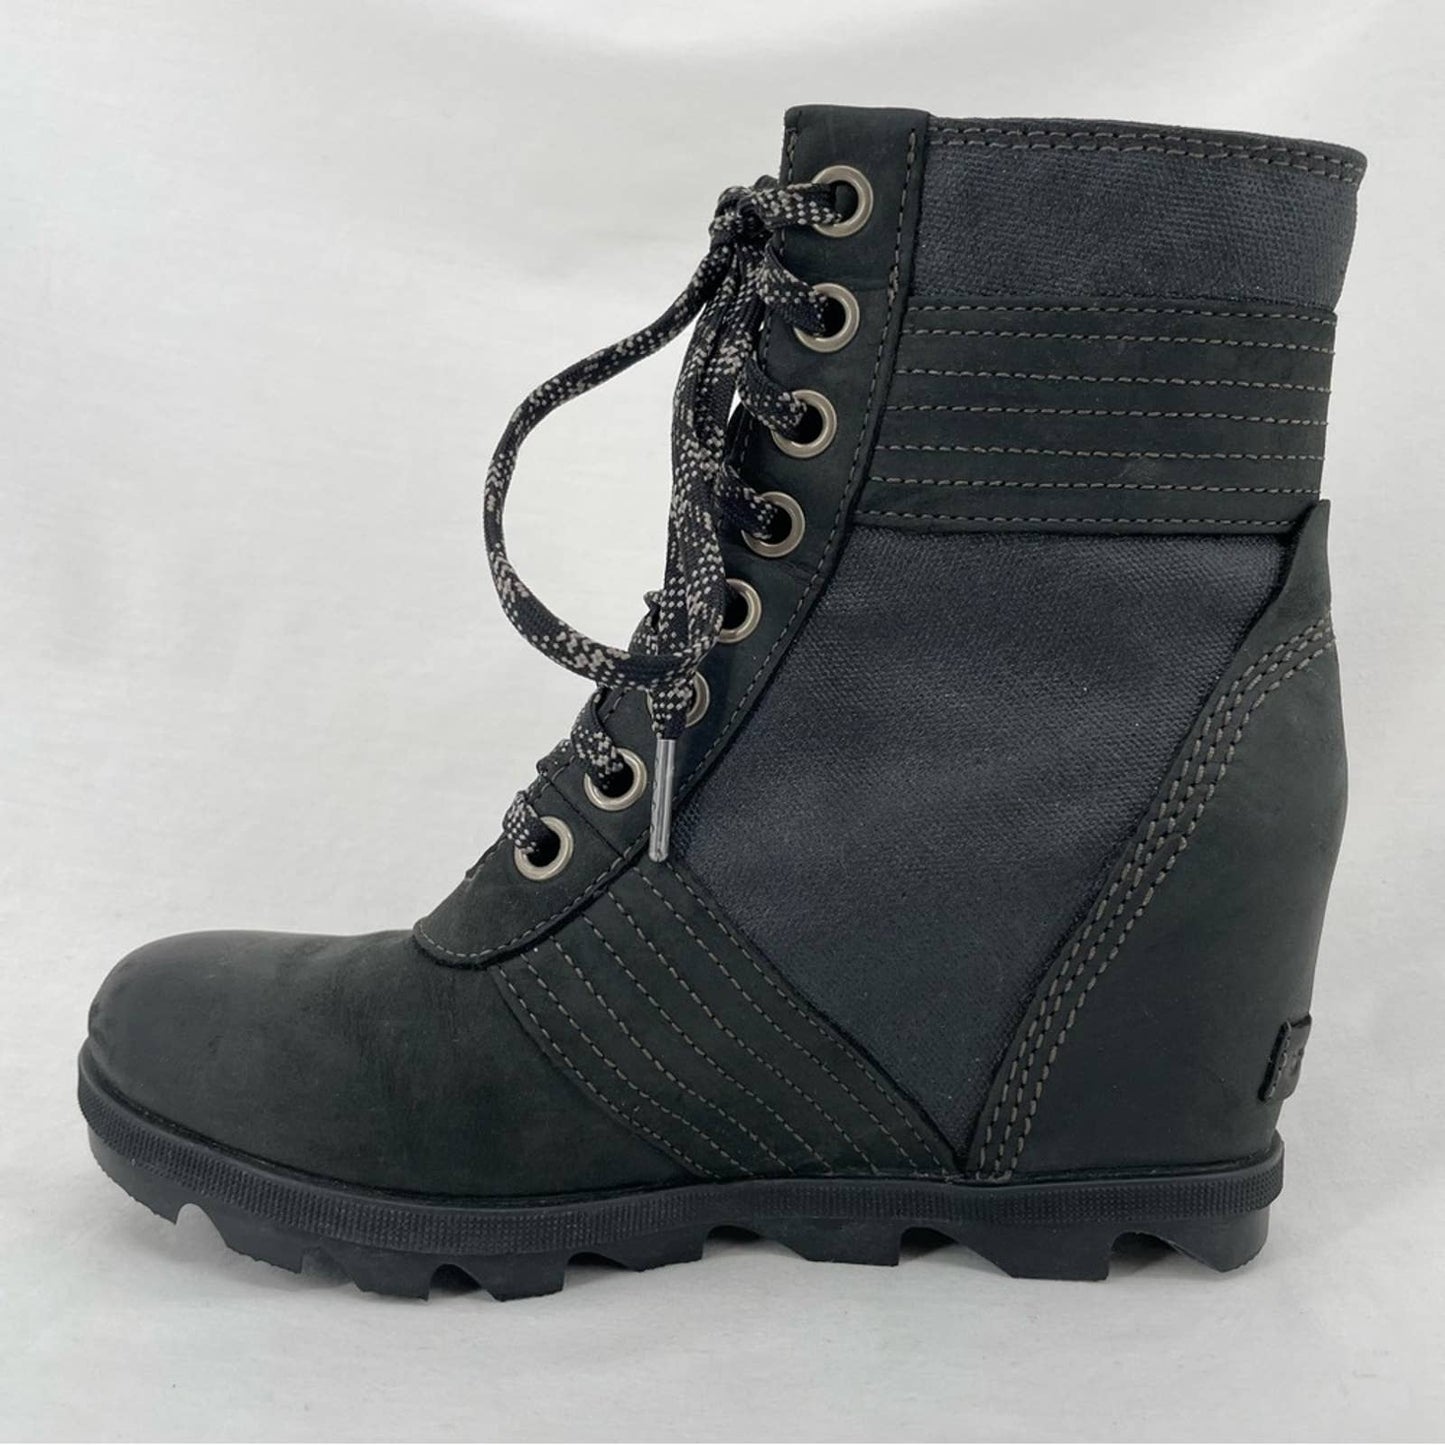 Sorel Womens Lexie Wedge Boot Black Leather Waterproof Canvas Winter Booties Size 8.5